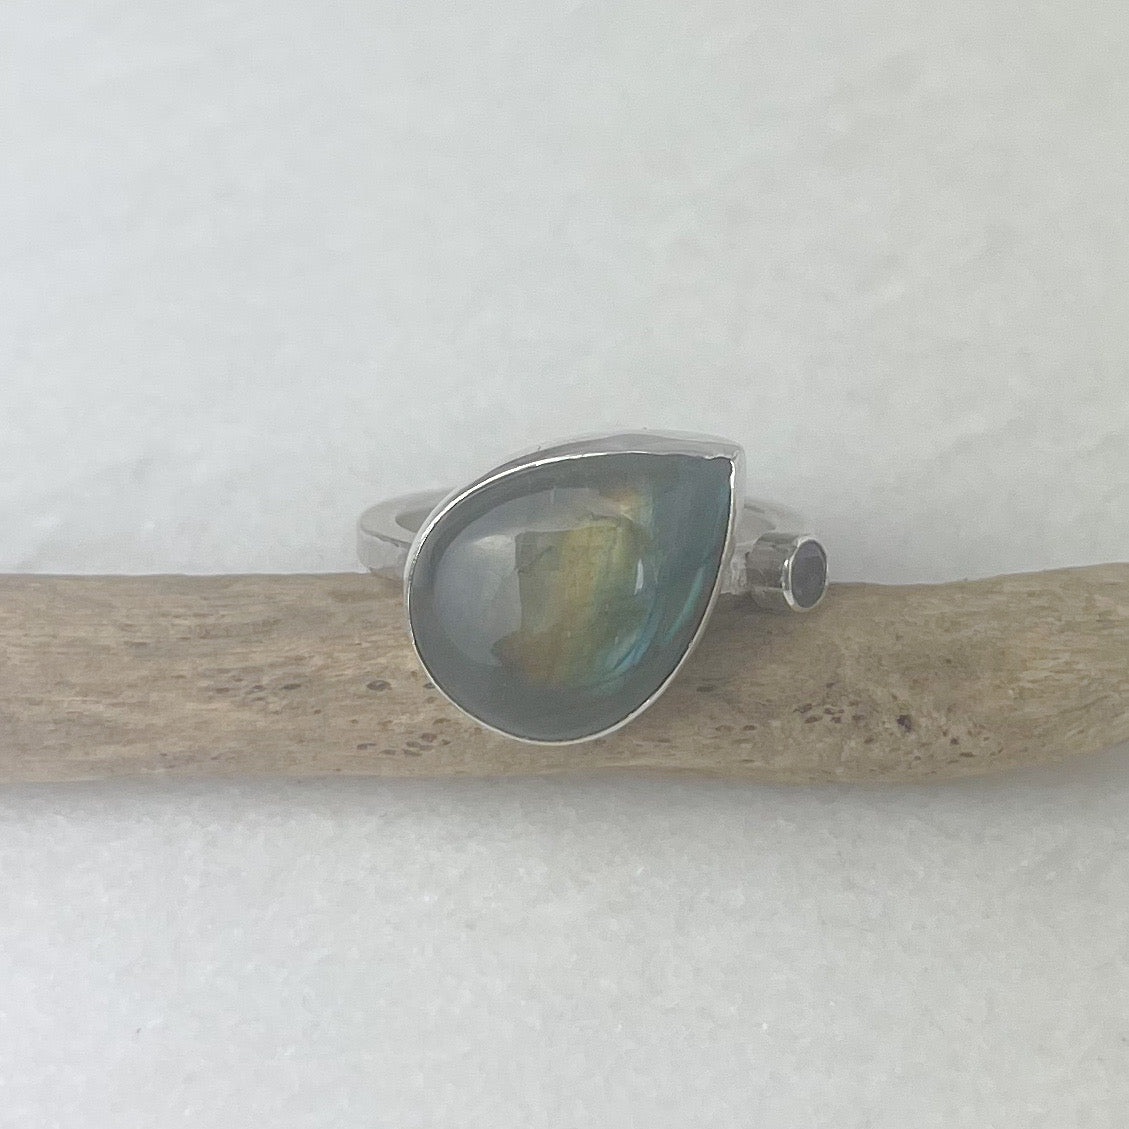 Labradorite Teardrop Ring - The Nancy Smillie Shop - Art, Jewellery & Designer Gifts Glasgow